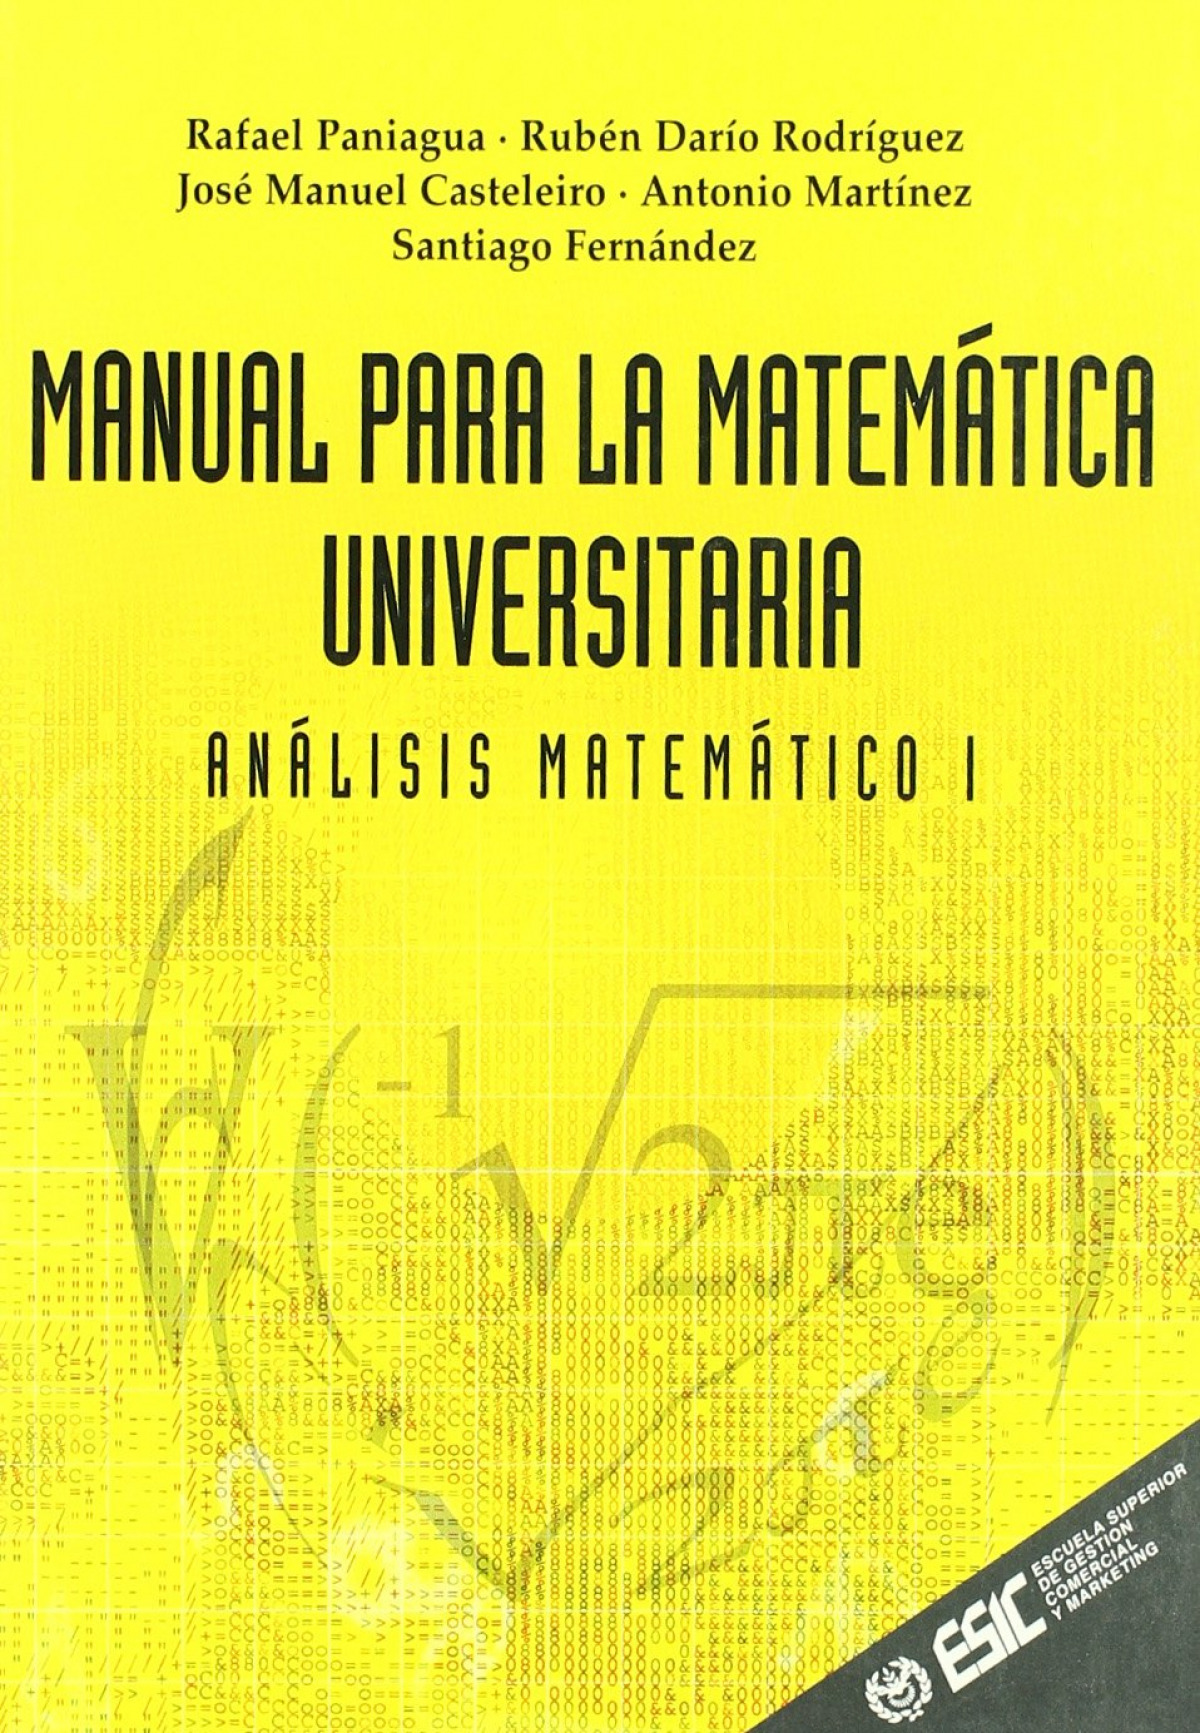 Manual para la matemática universitaria - Paniagua, Rafael, Ruben Dario Rodriguez, Jose Manuel Casteleiro